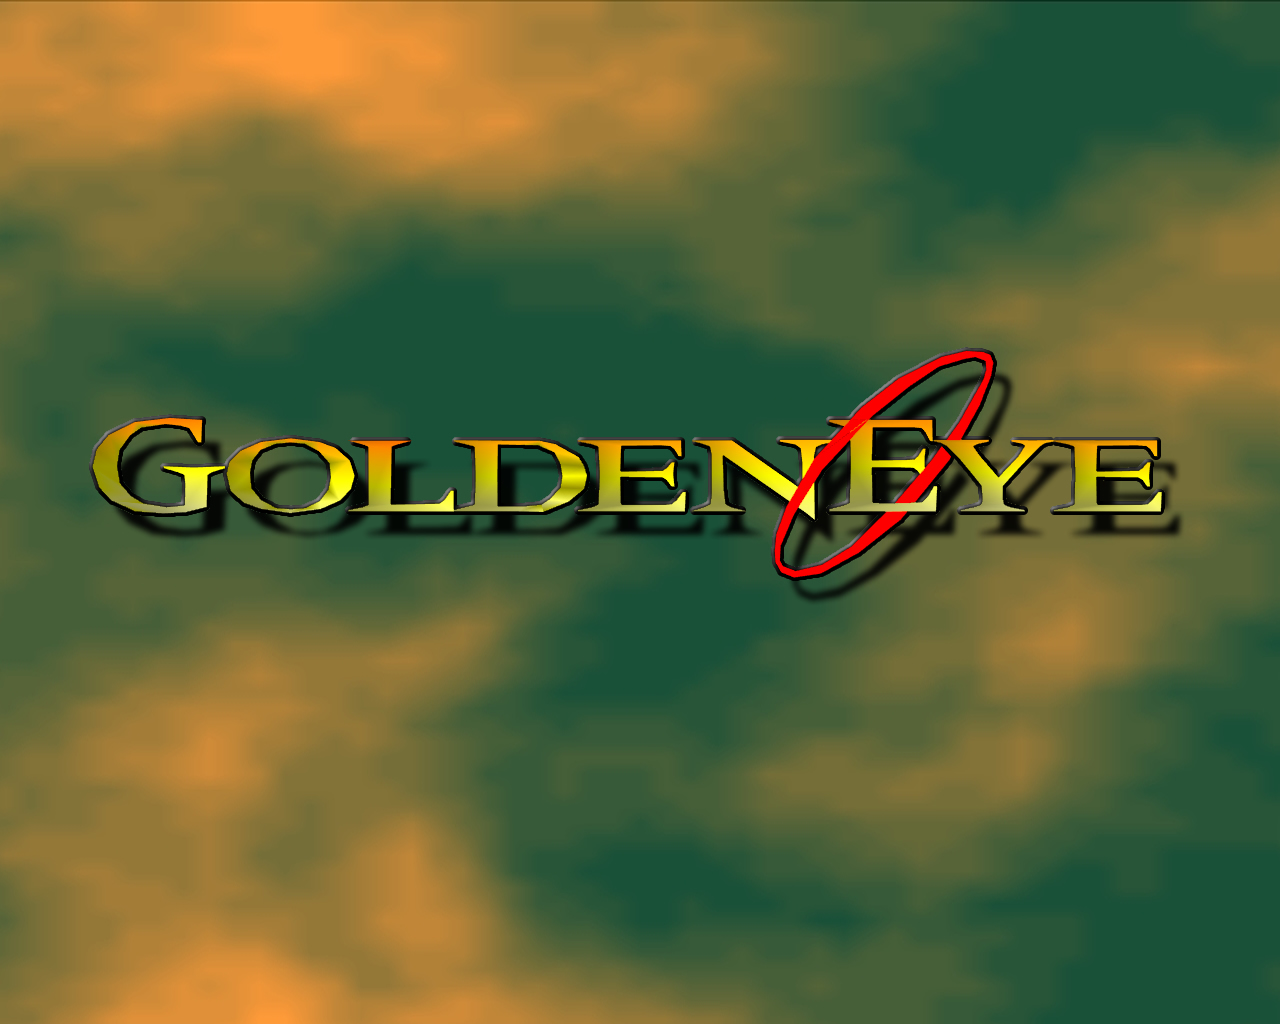 Goldeneye N64 Citadel Theme Wallpaper